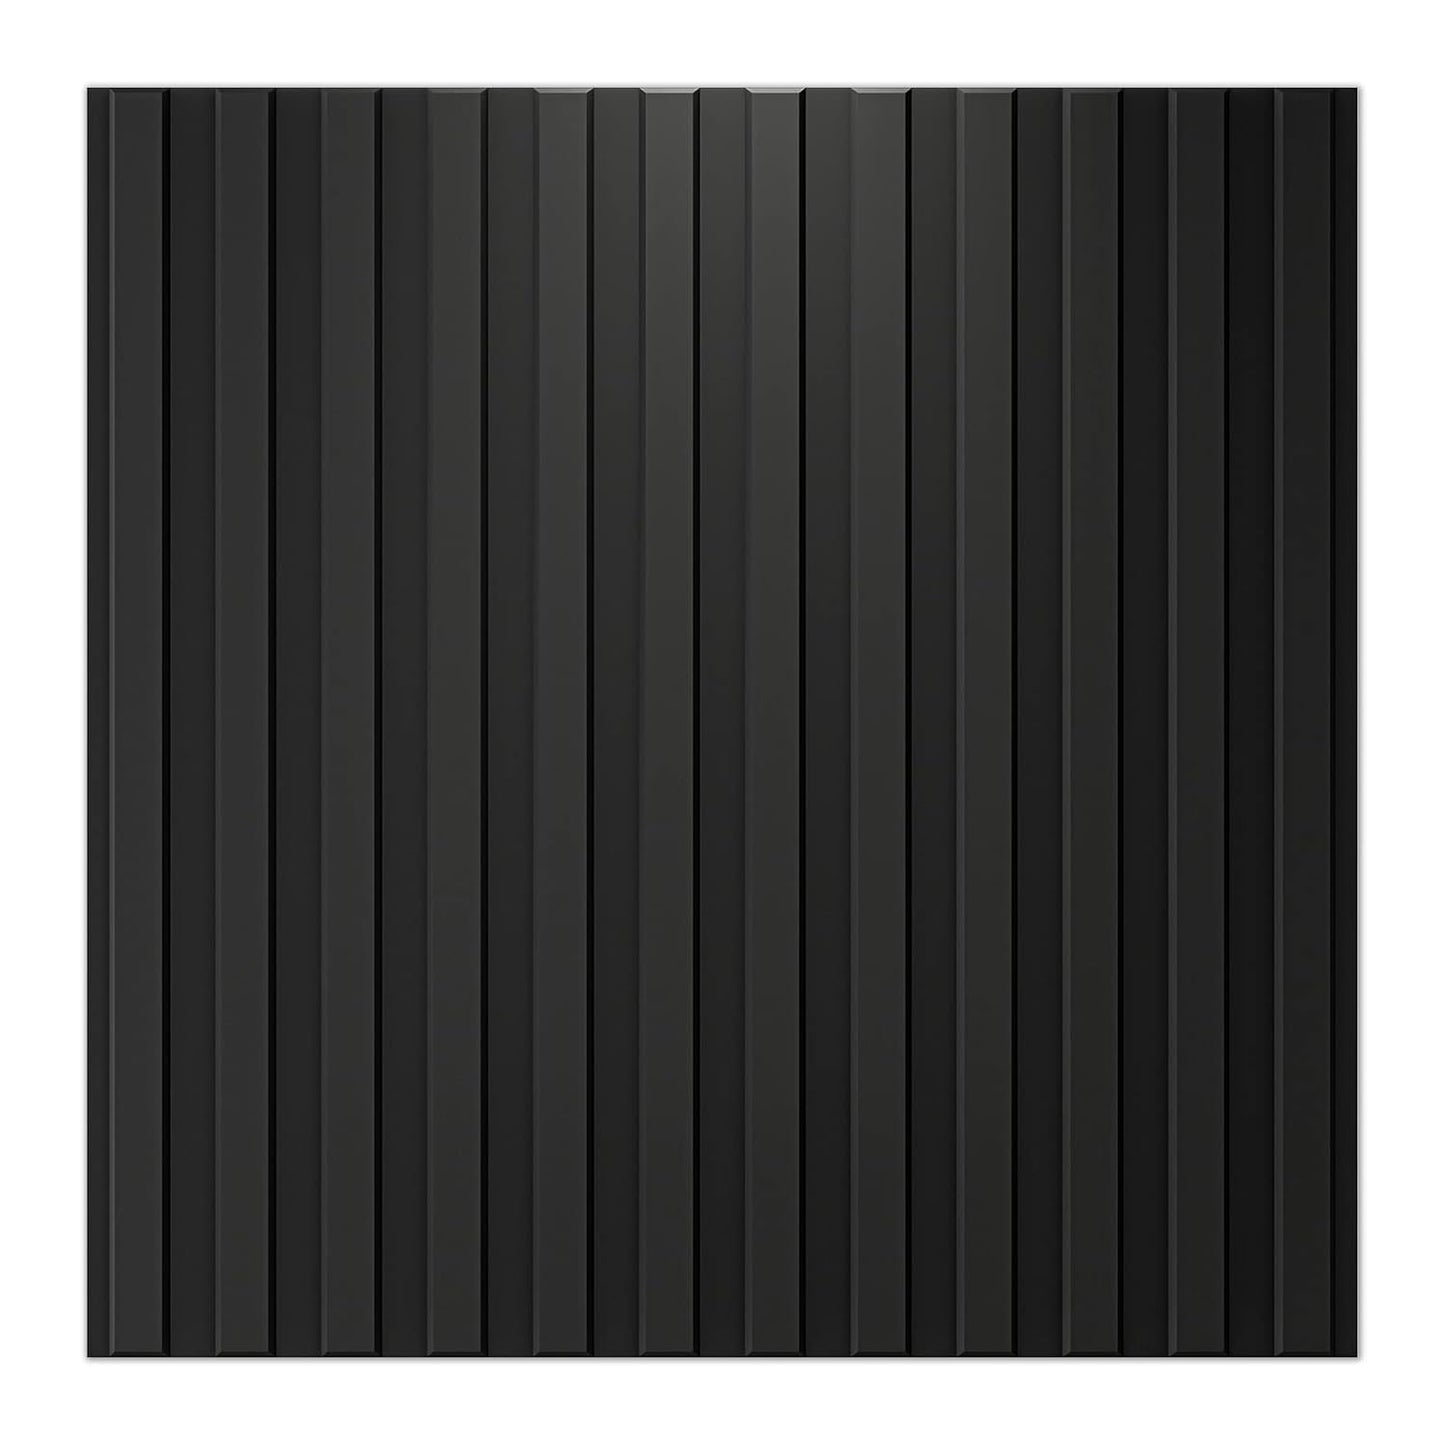 Panel de pared de listones Art3d, panel texturizado estriado 3D, 12 azulejos, 19,7 x 19,7 pulgadas. - Negro 